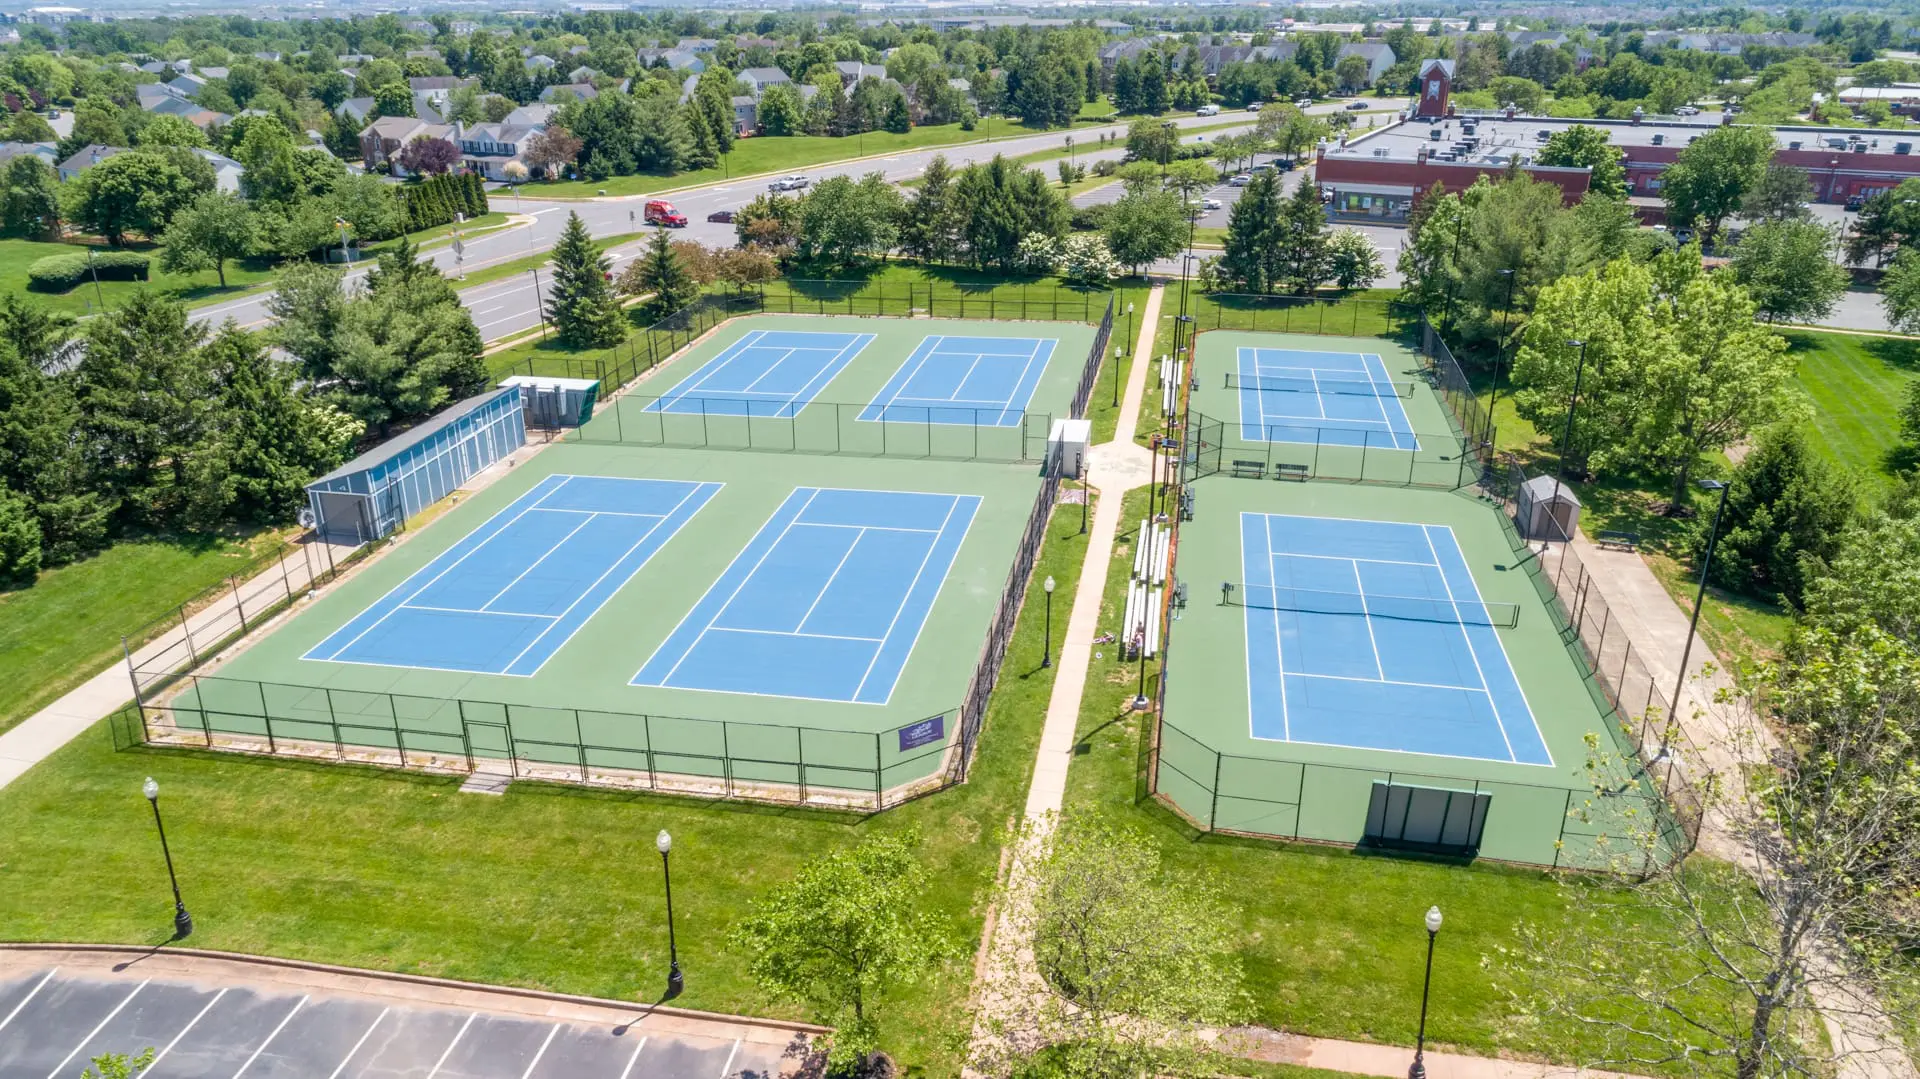 Ashburn Village Sports Pavilion outdoor tennis courts